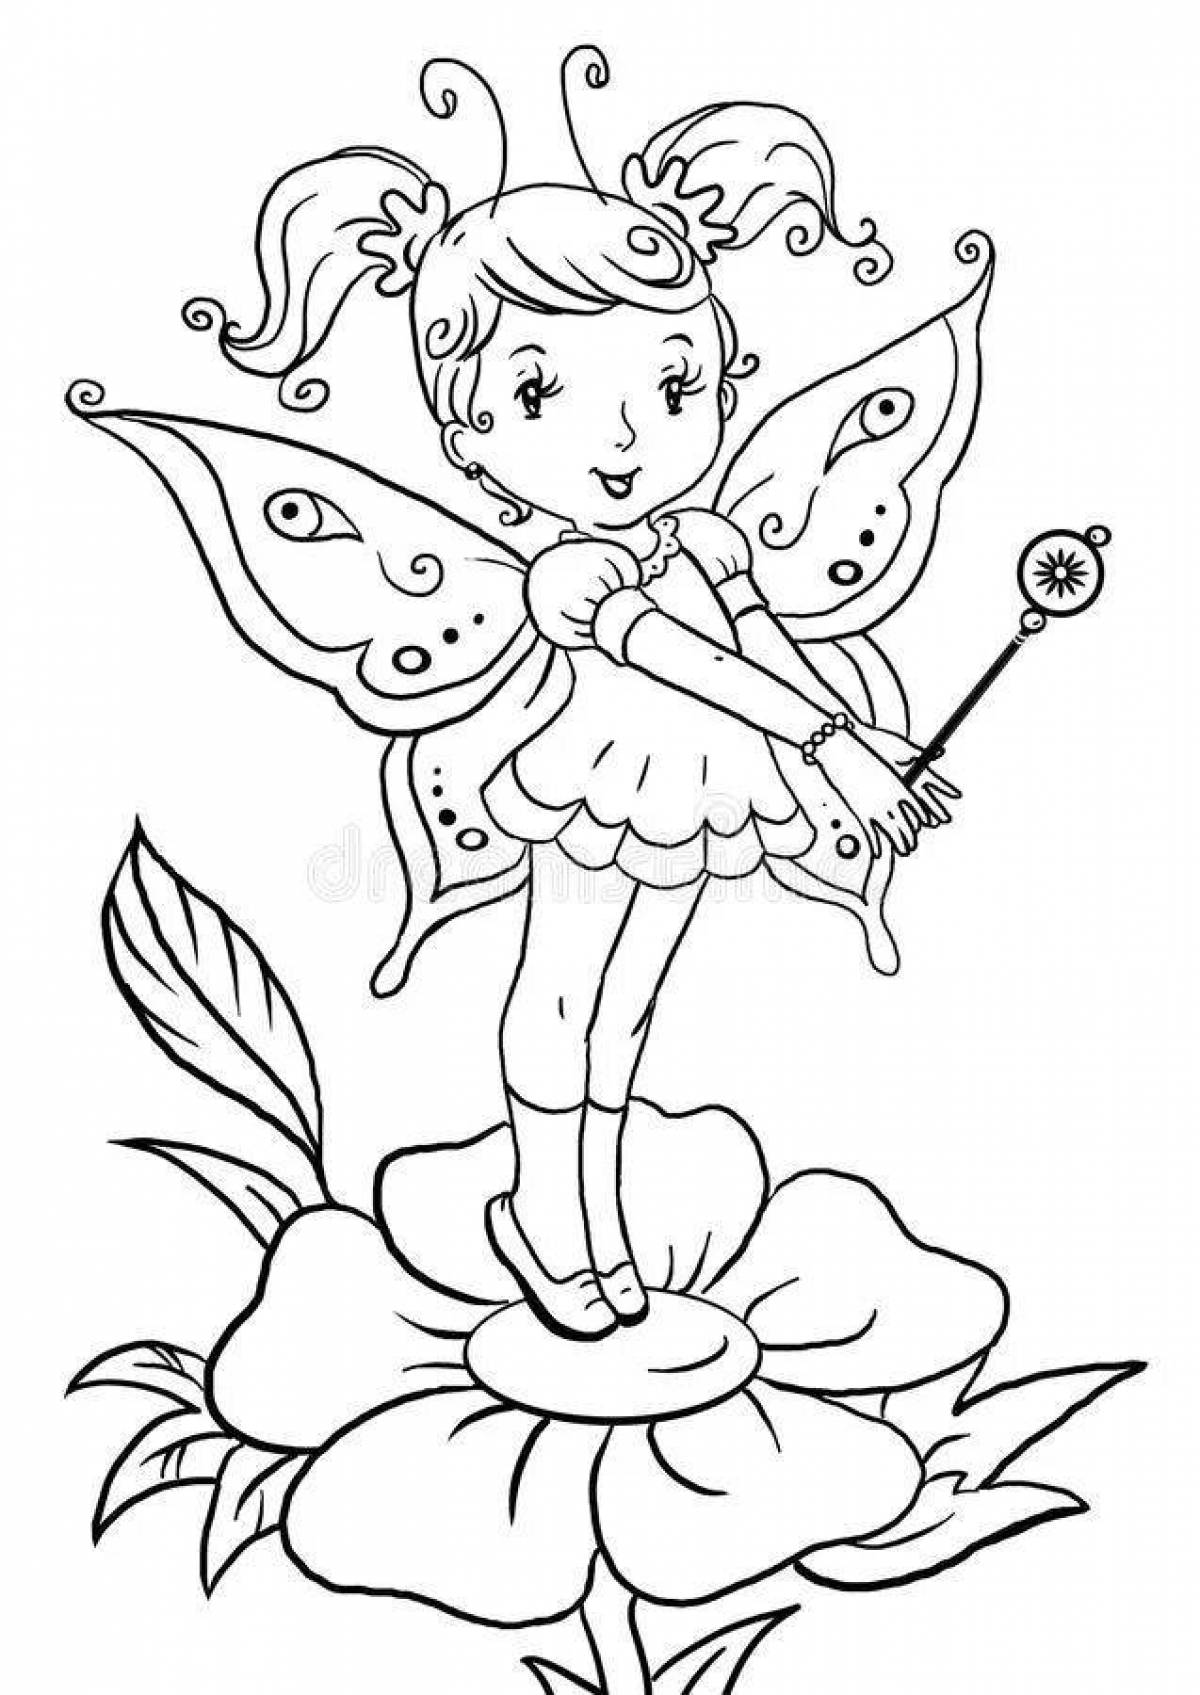 Cute little fairy coloring book